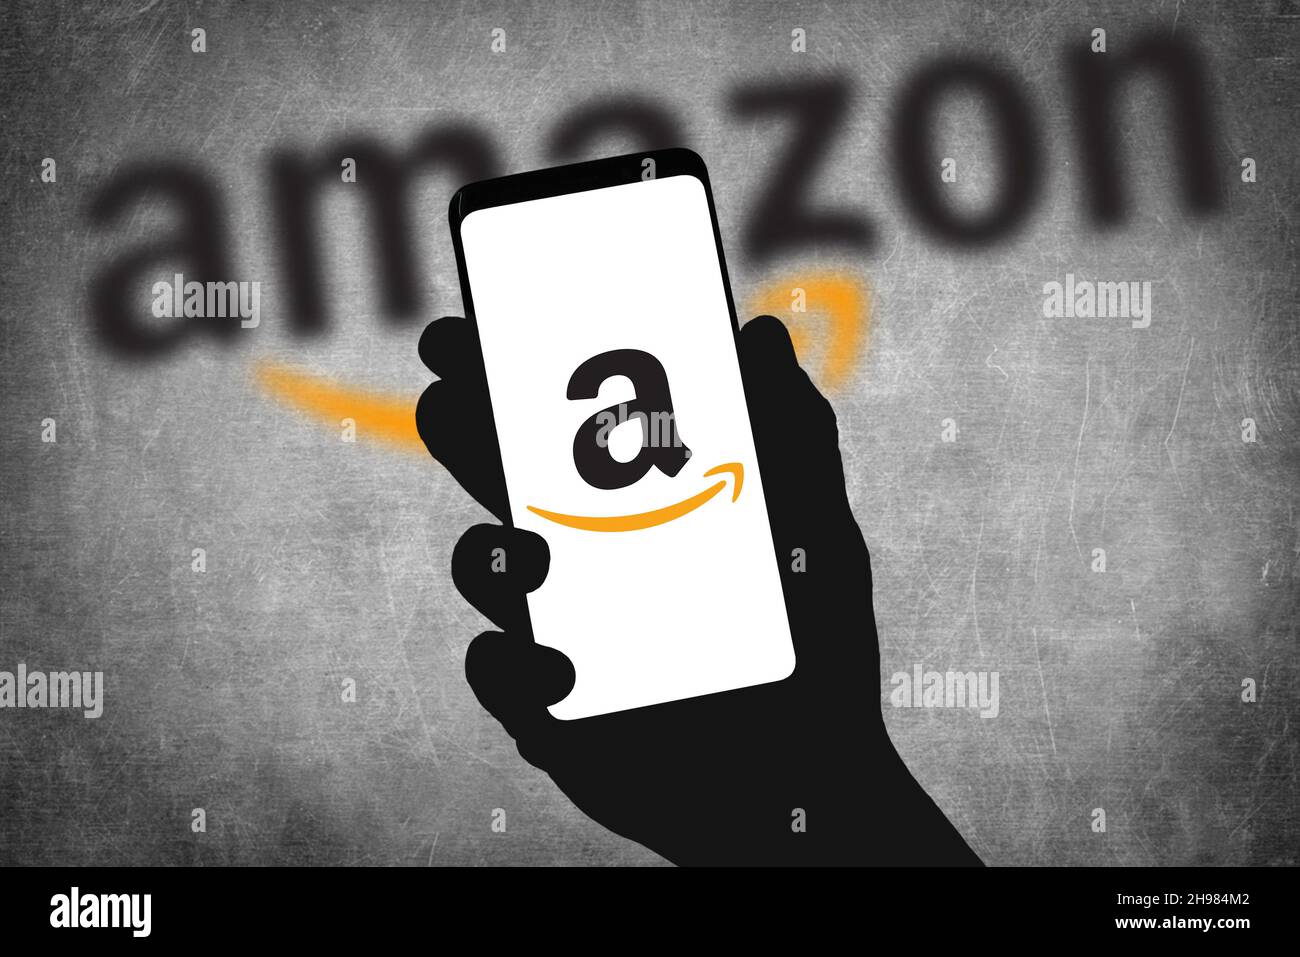 Amazon company - internet shopping Stock Photo